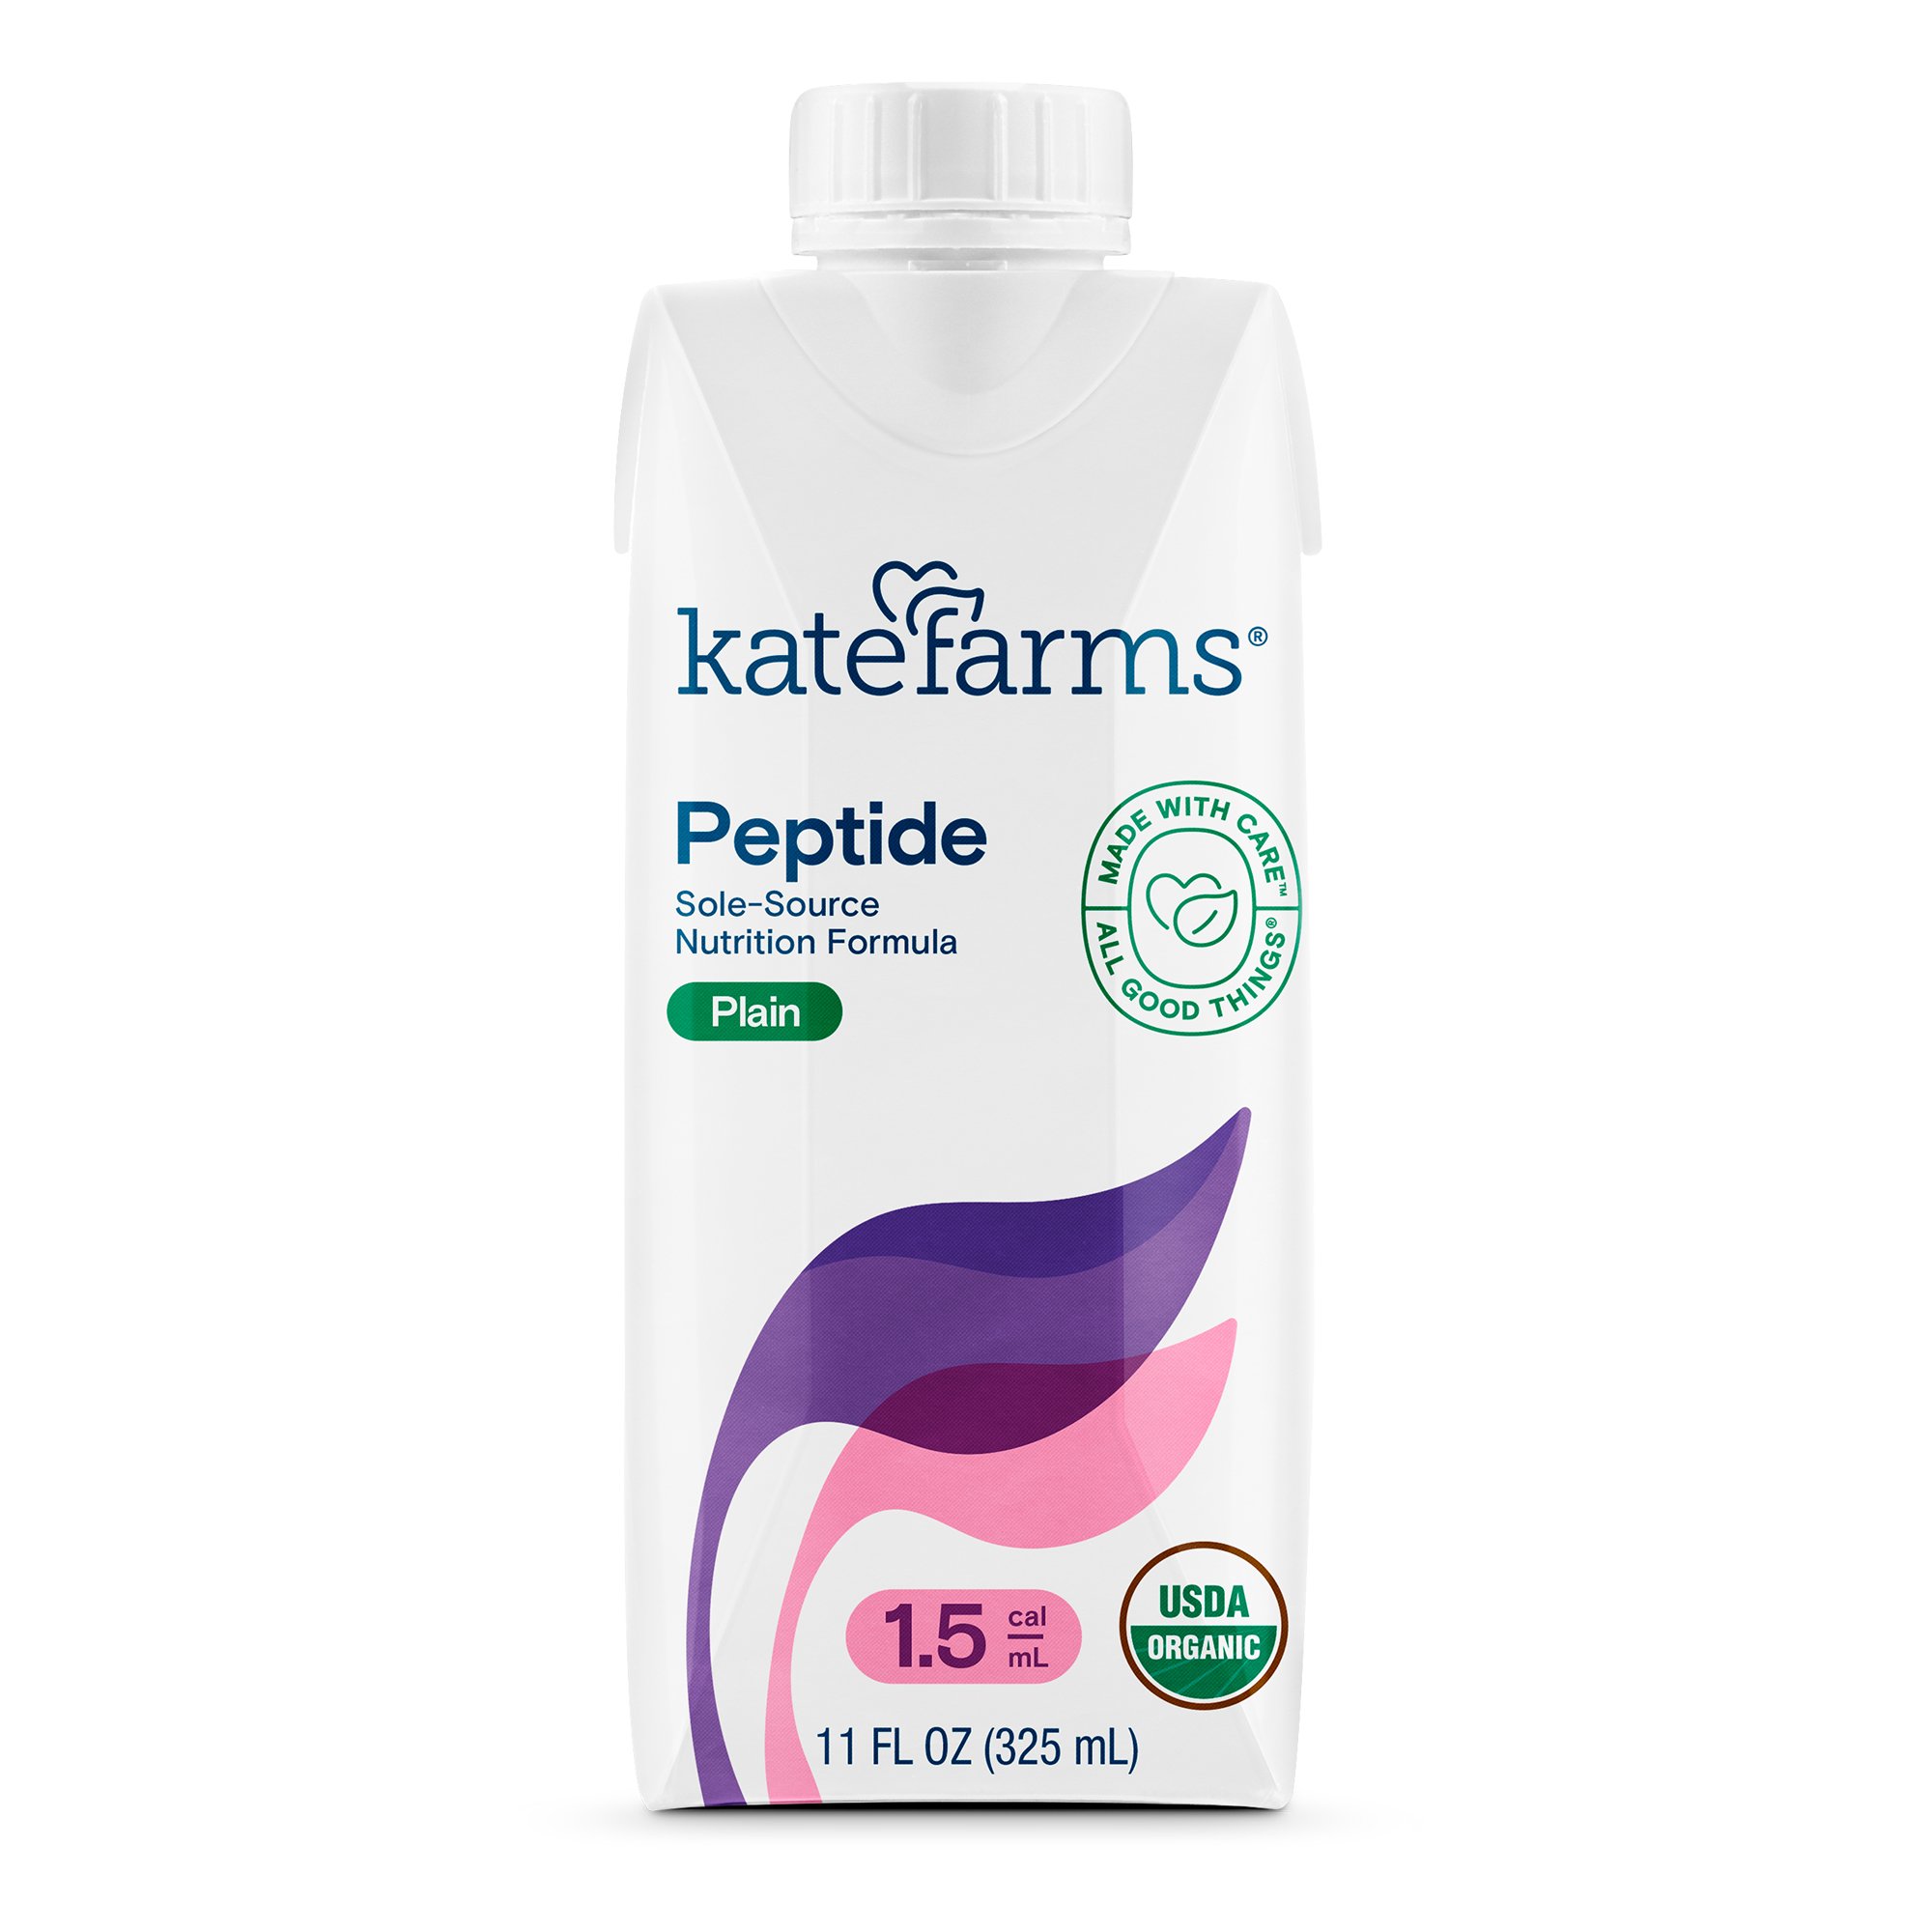 Kate Farms Standard 1.5 Sole-Source Nutrition Formula, 11-ounce carton MK 1053183